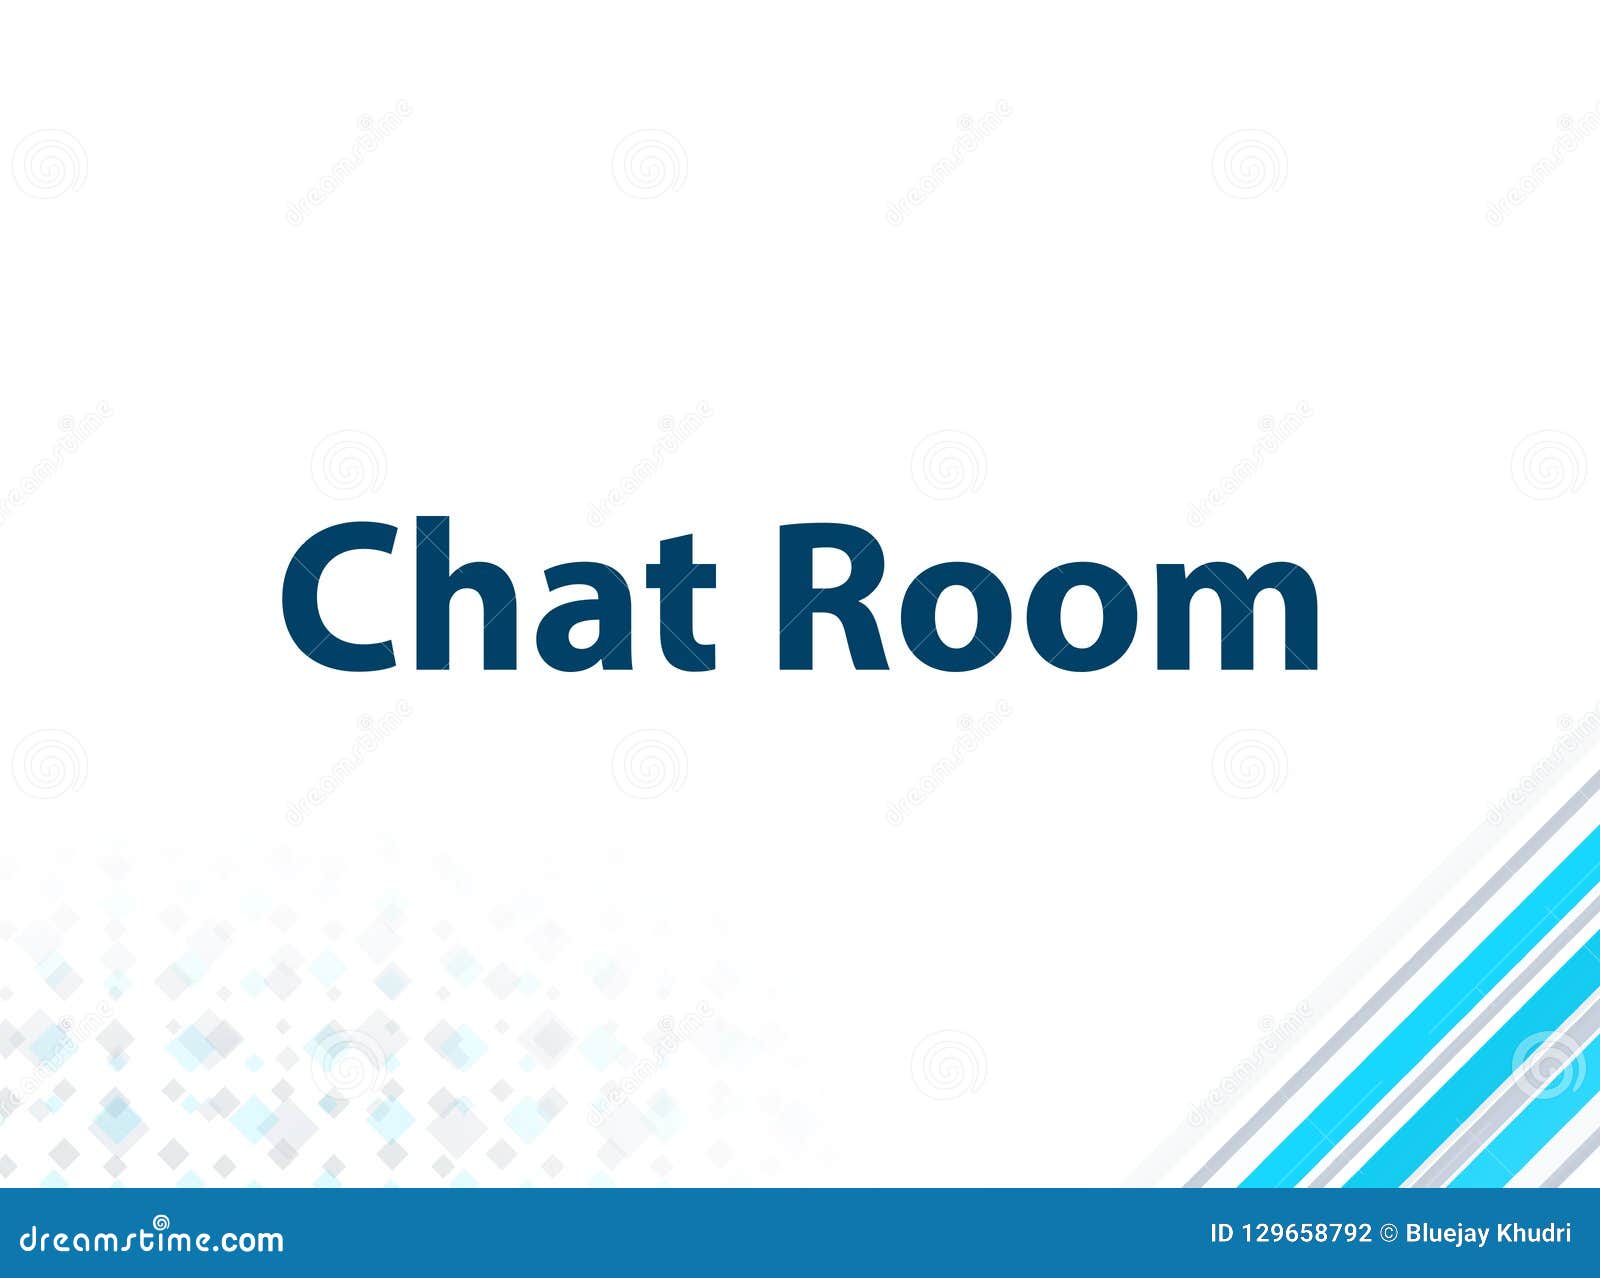 Z chat room